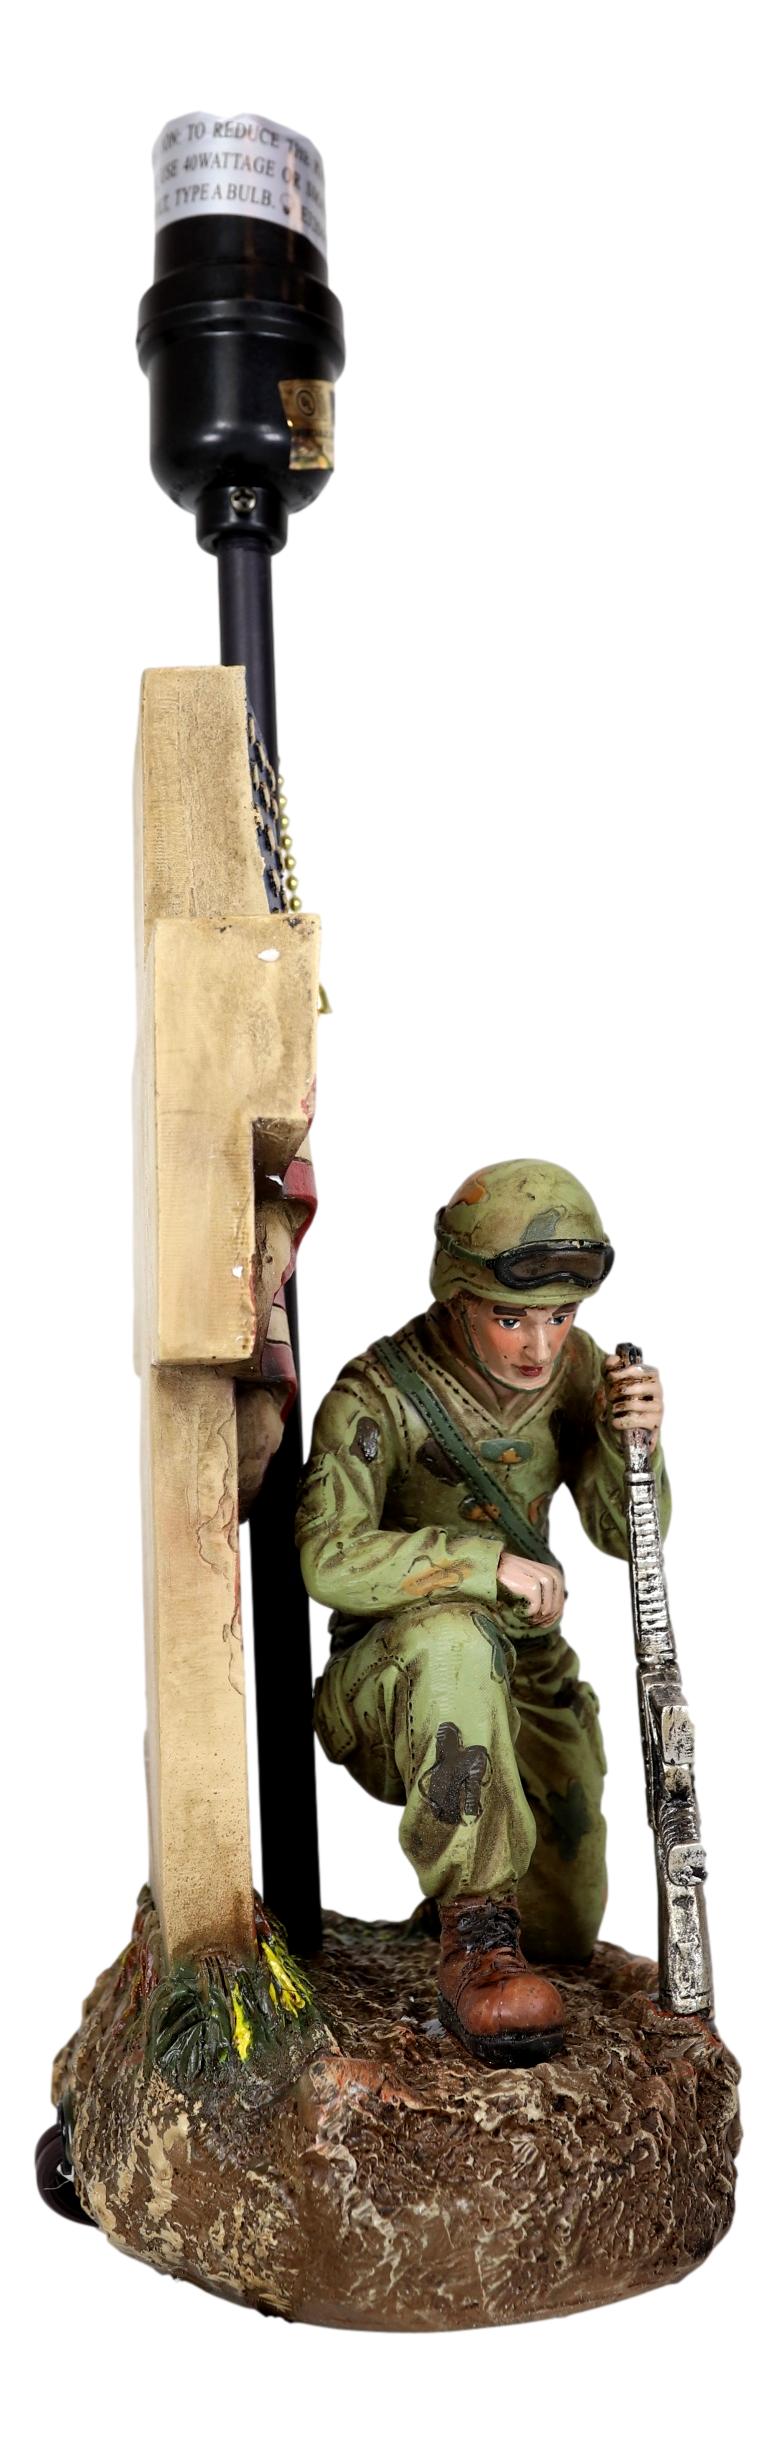 Patriotic Soldier With Rifle Kneeling By American Flag Cross Memorial Table Lamp